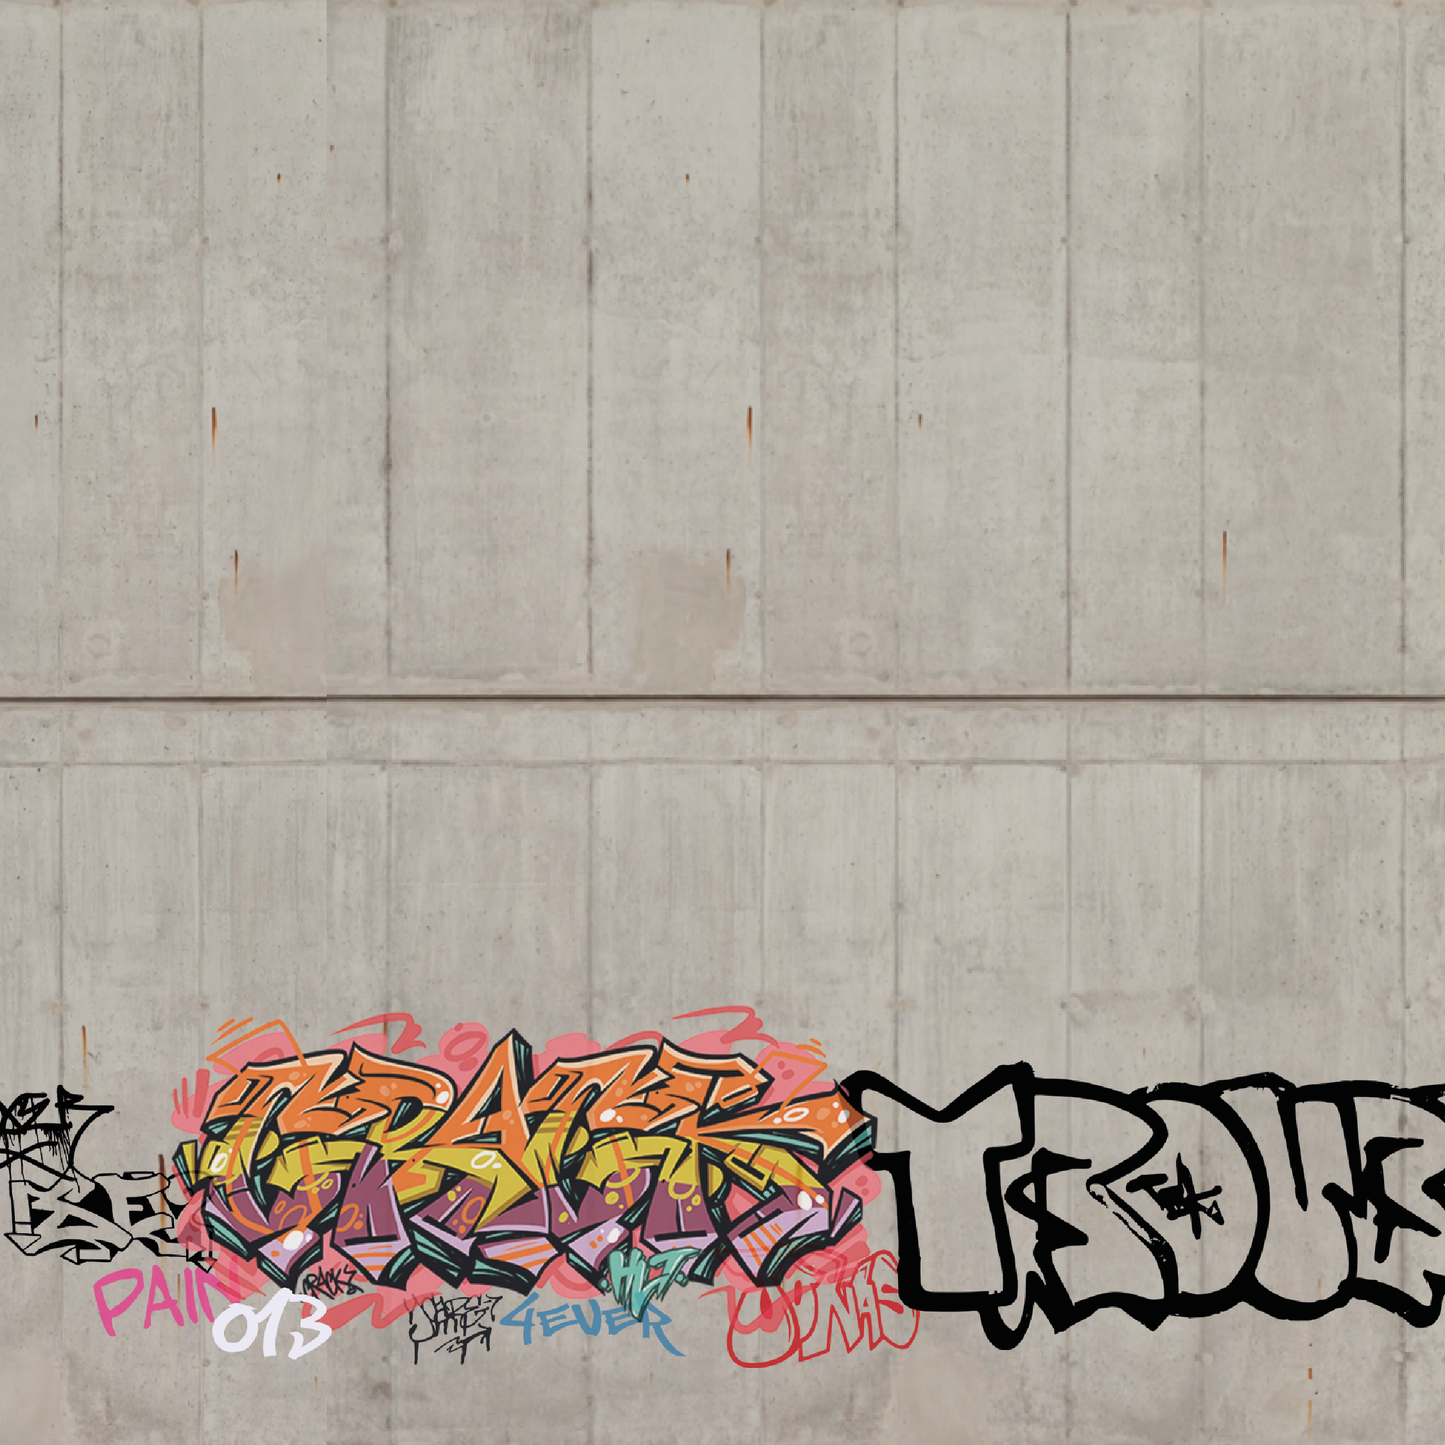 Modeltex : Retaining Wall Concrete 01 - Graffiti